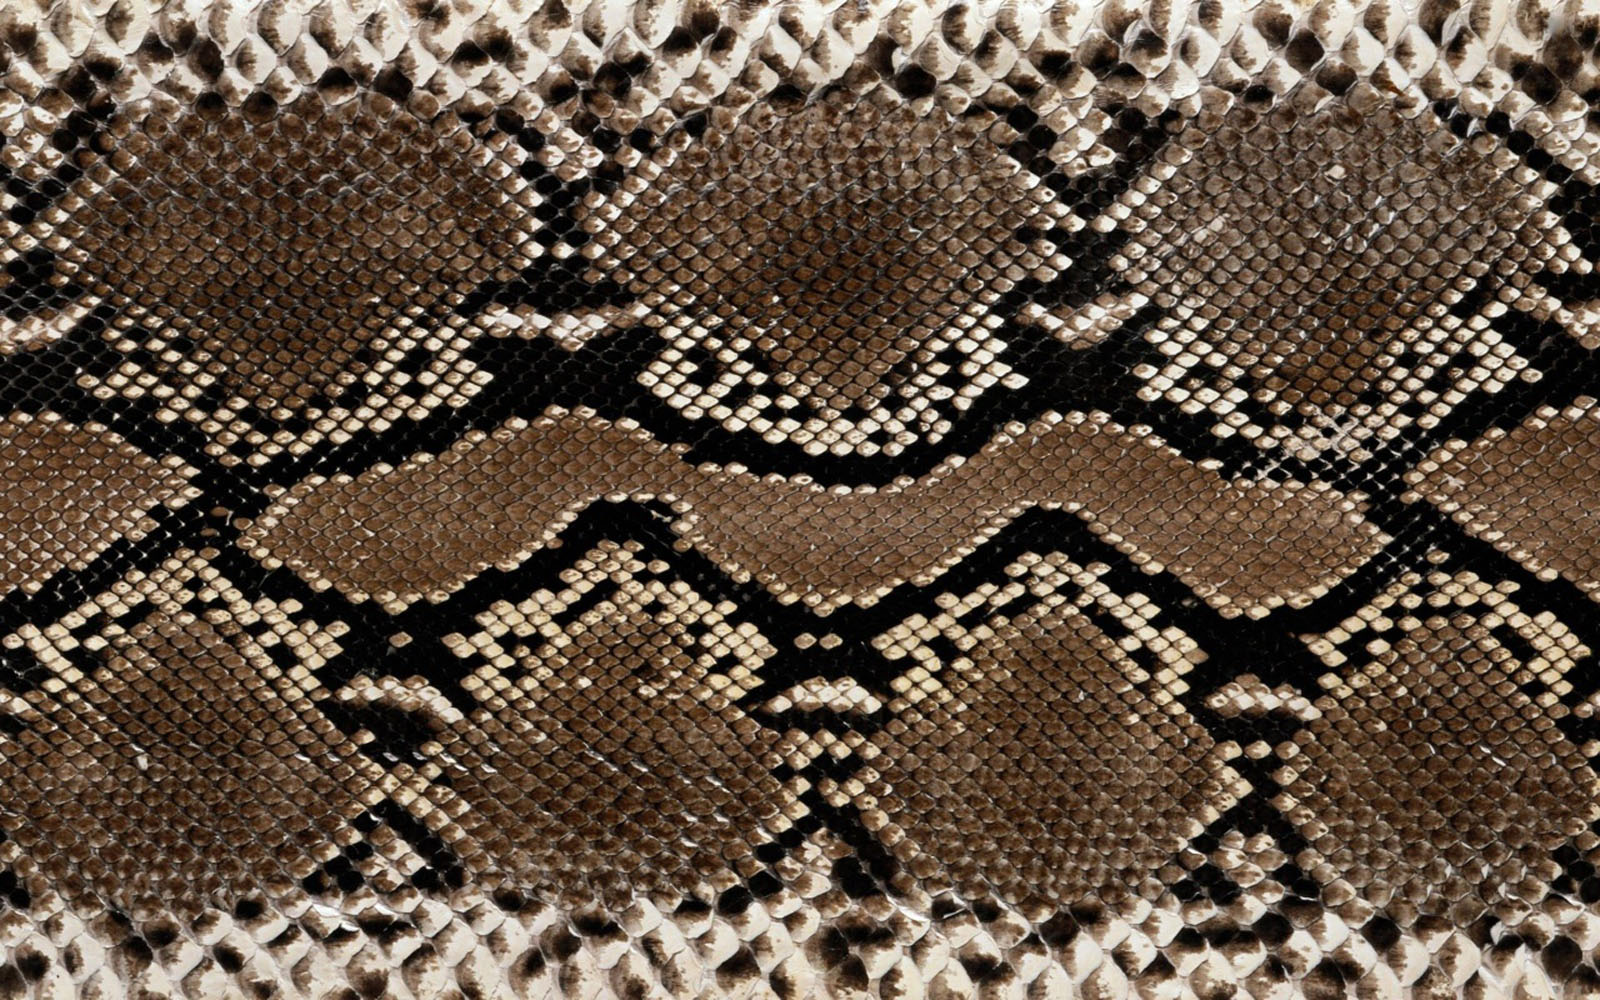 http://3.bp.blogspot.com/-dNbujvH_lSA/T1yqJNfFRlI/AAAAAAAAA8Q/5REdB-kH-Tc/s1600/Snake+Skin+Wallpapers+2.jpg